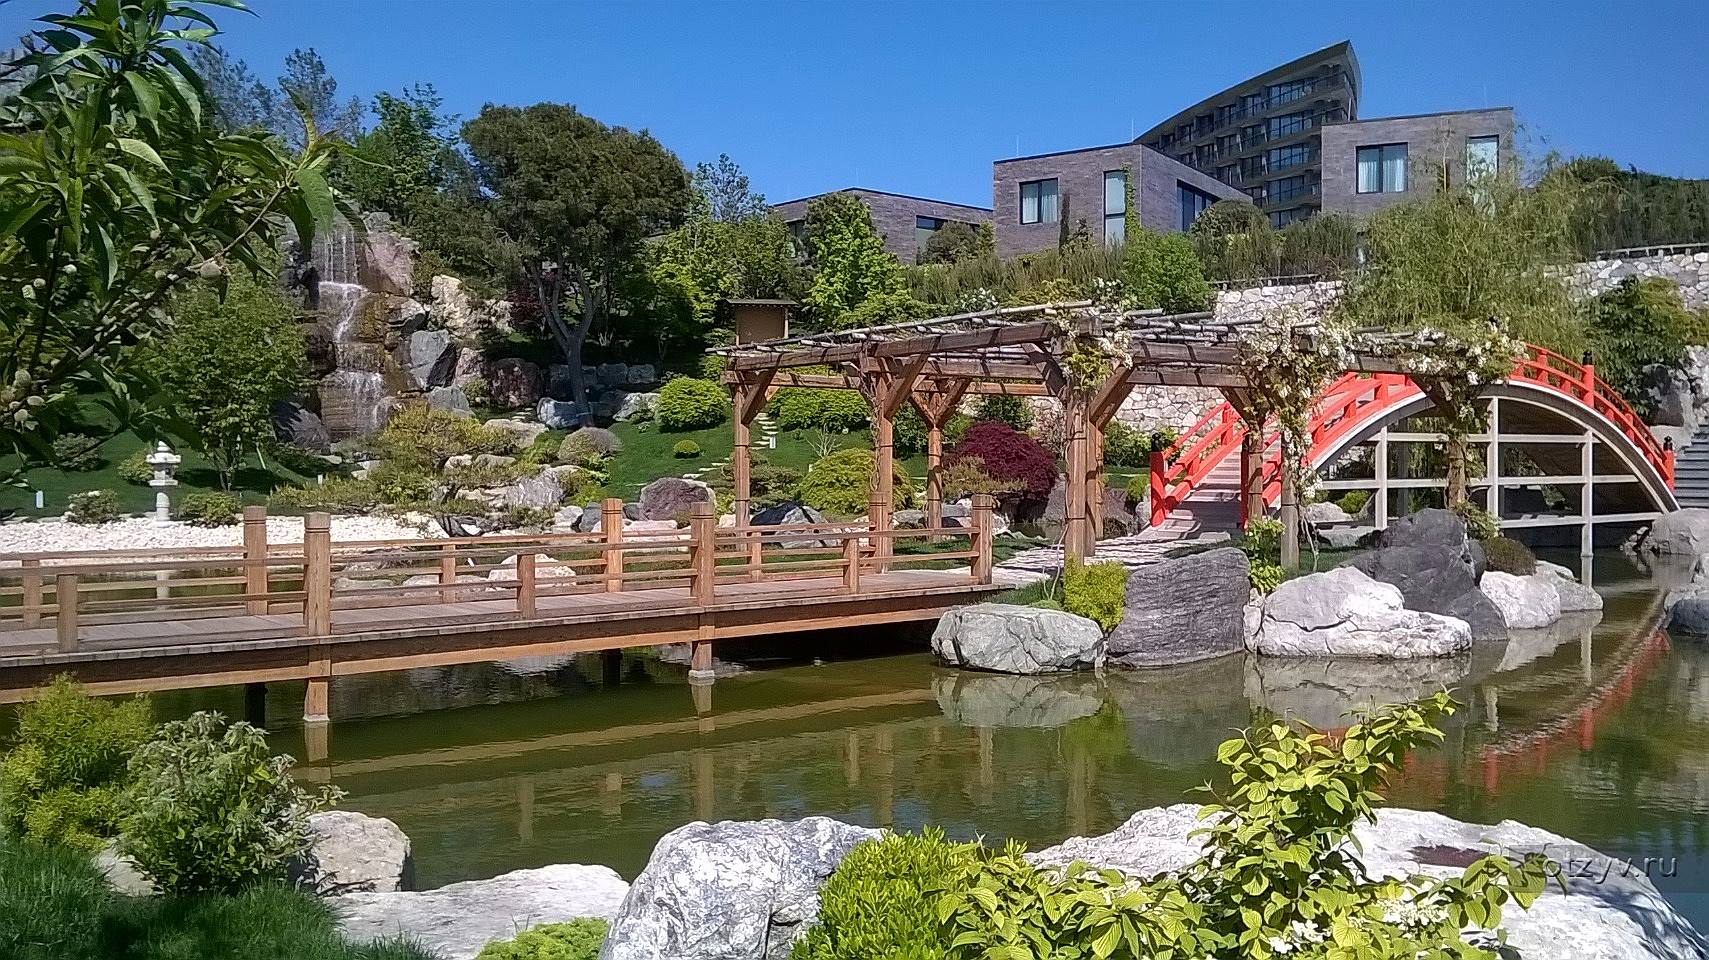 Японский сад в крыму мрия фото